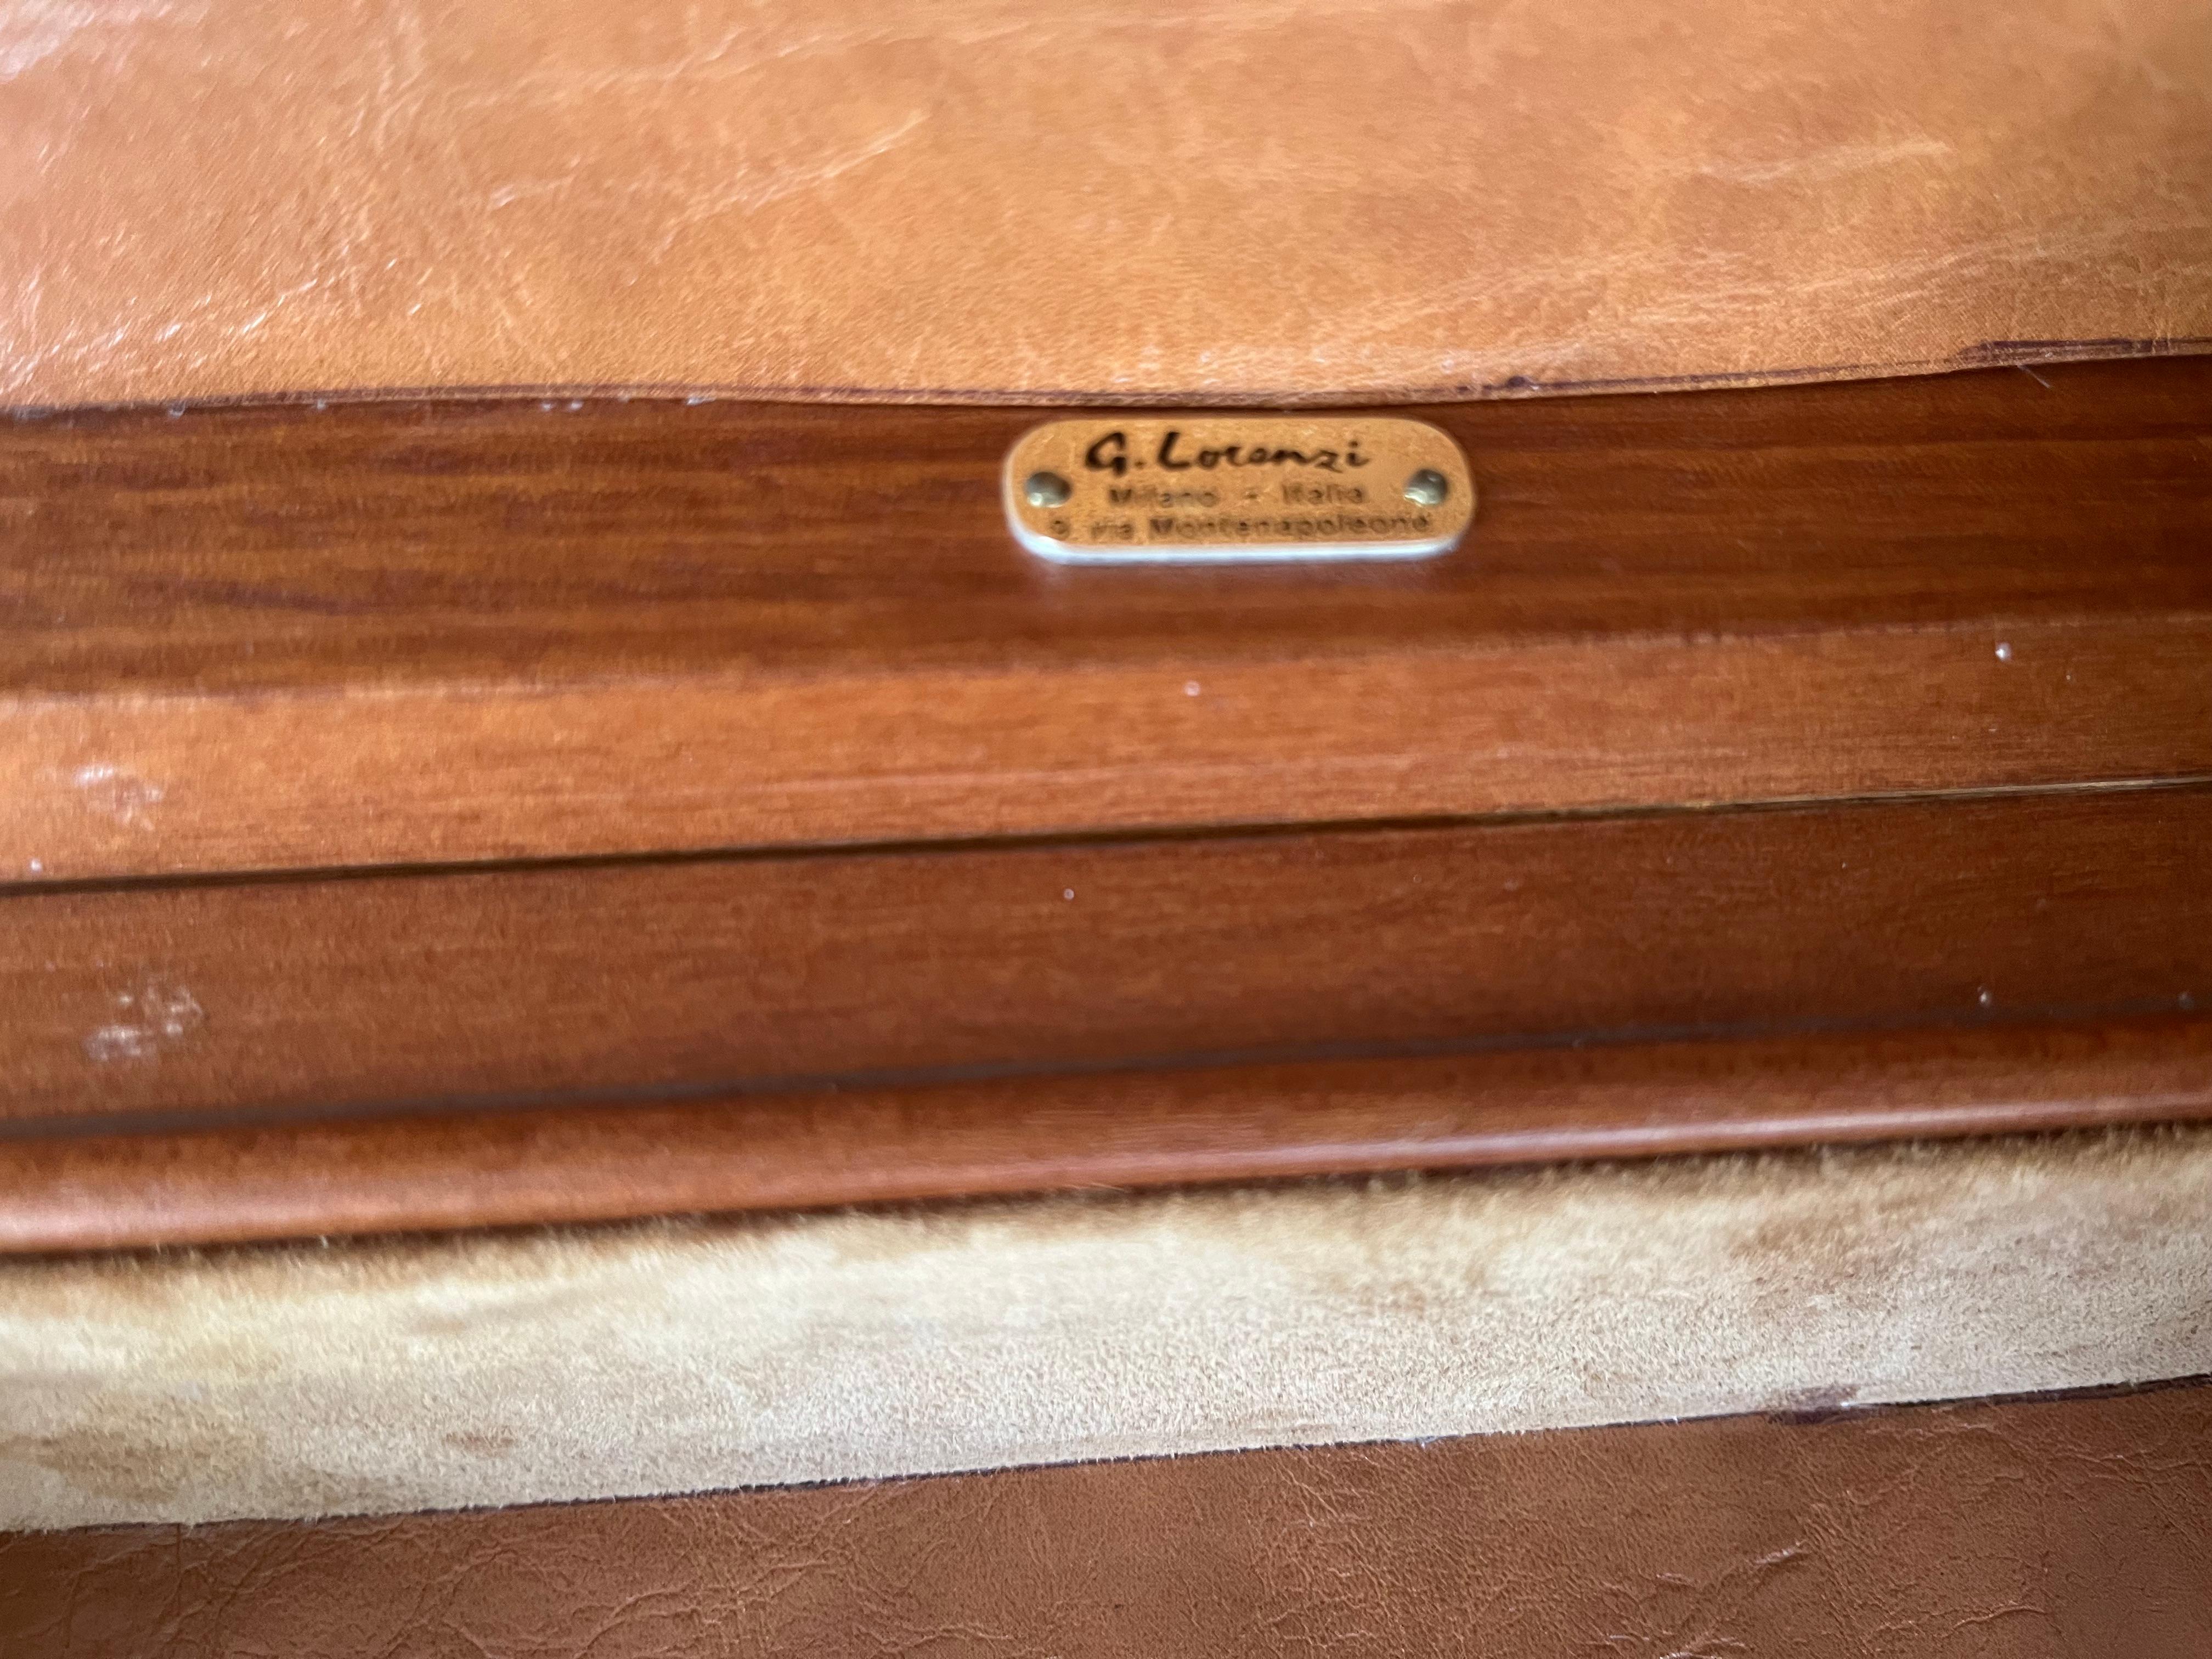 A vintage Bubinga wood box retailed by Giovanni Lorenzi-Milano having a leather interior.